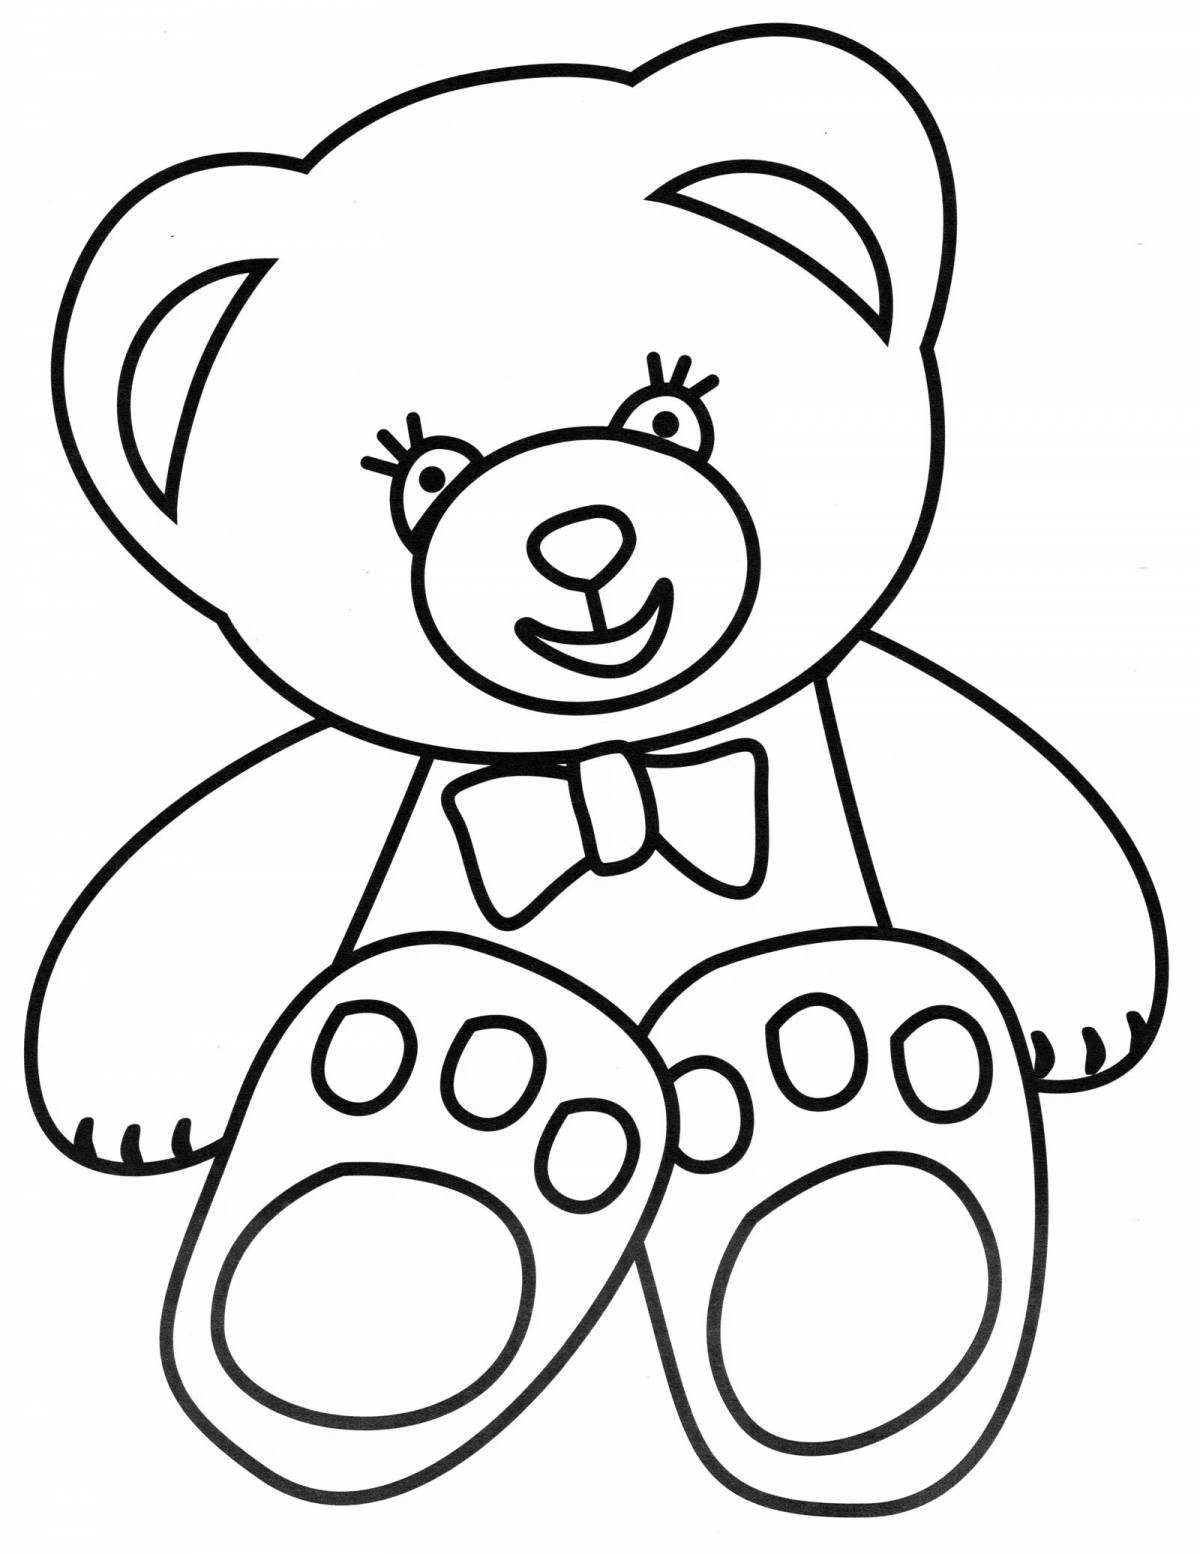 Fancy gummy bears coloring book